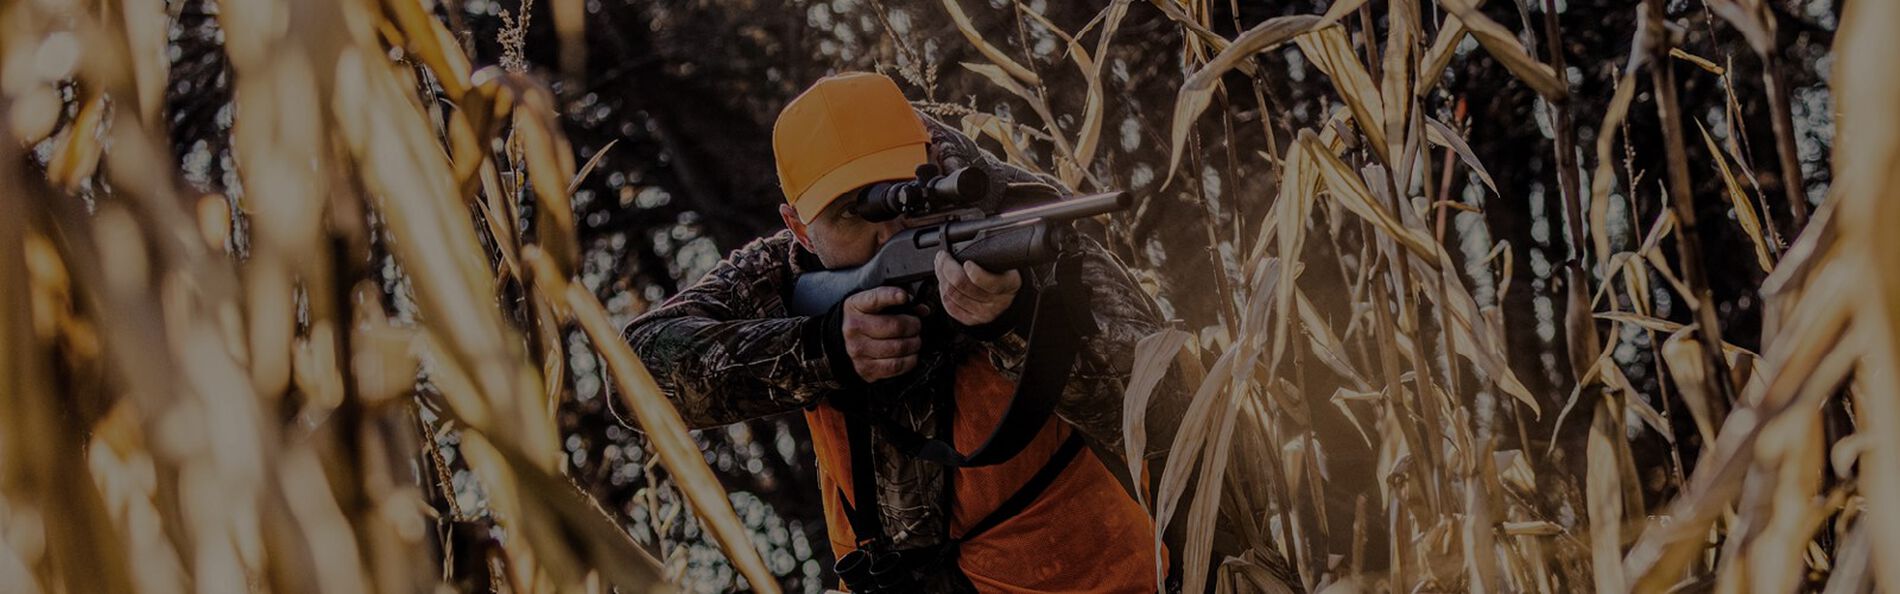 hunter aiming a rifle in a corn field